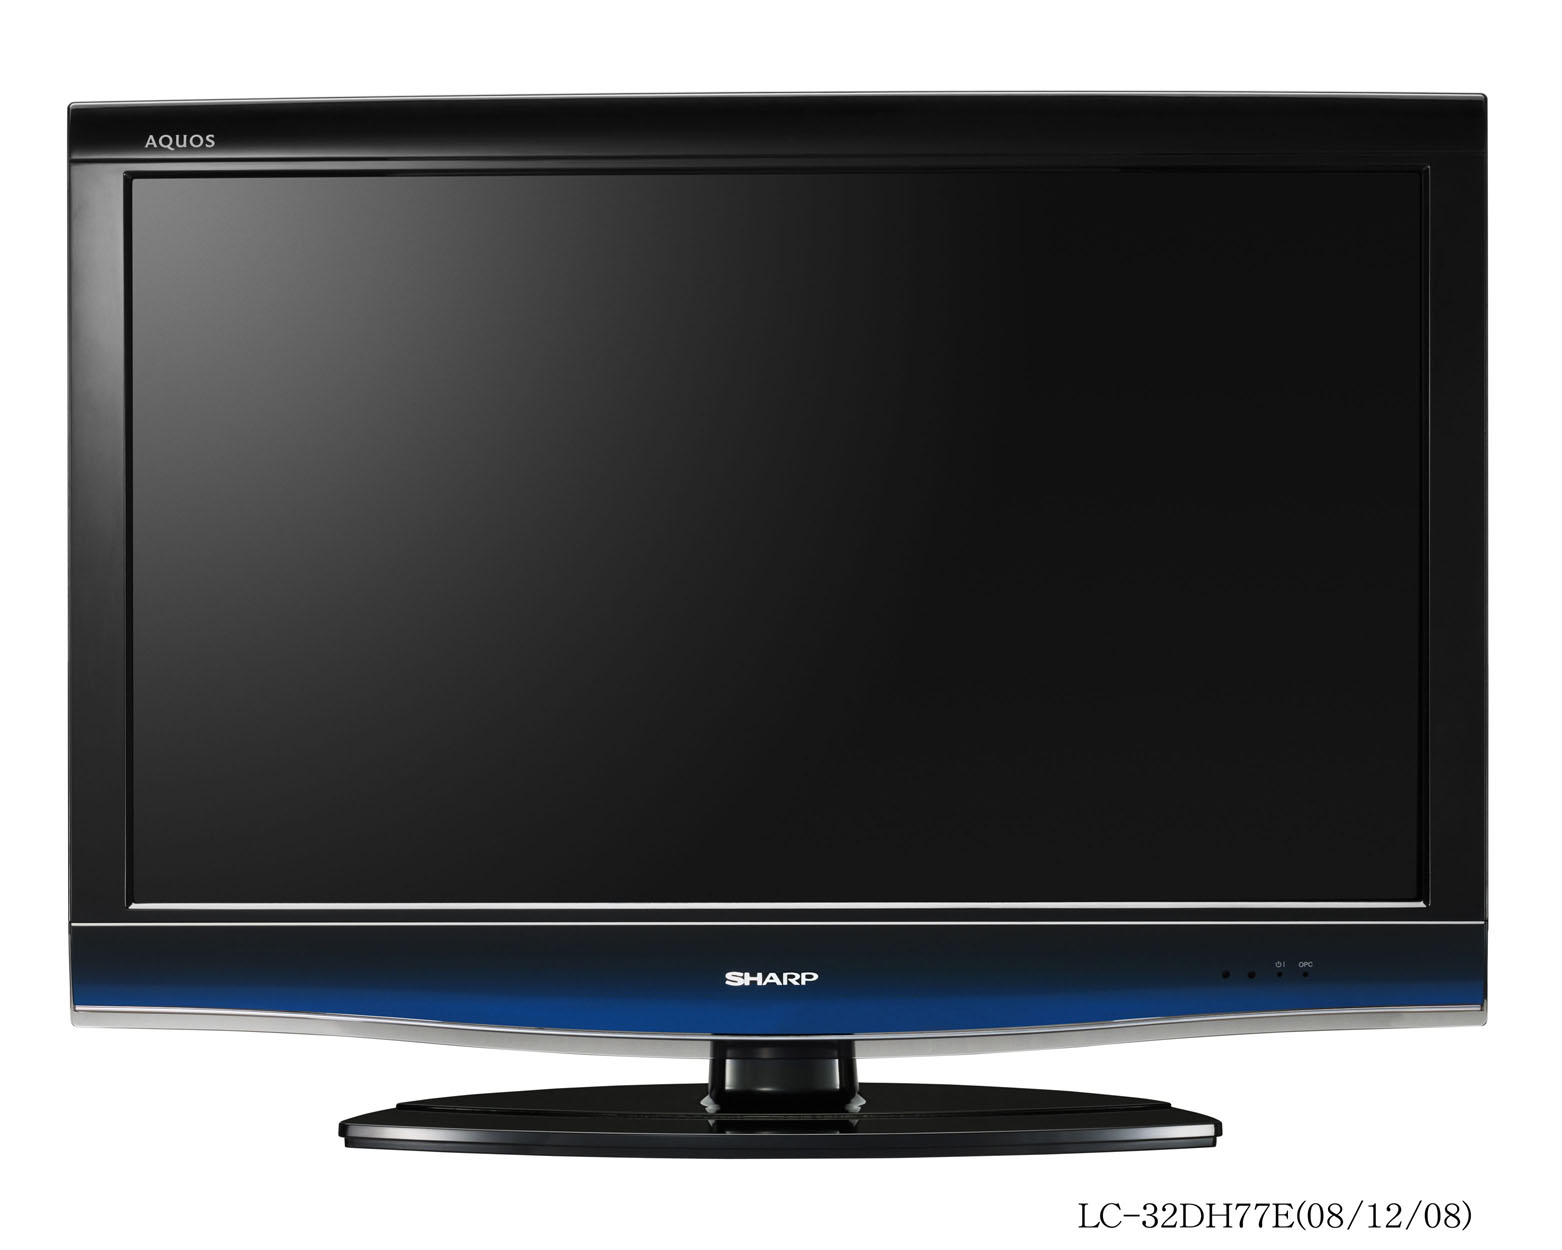 Telewizor LCD Sharp 32DH77